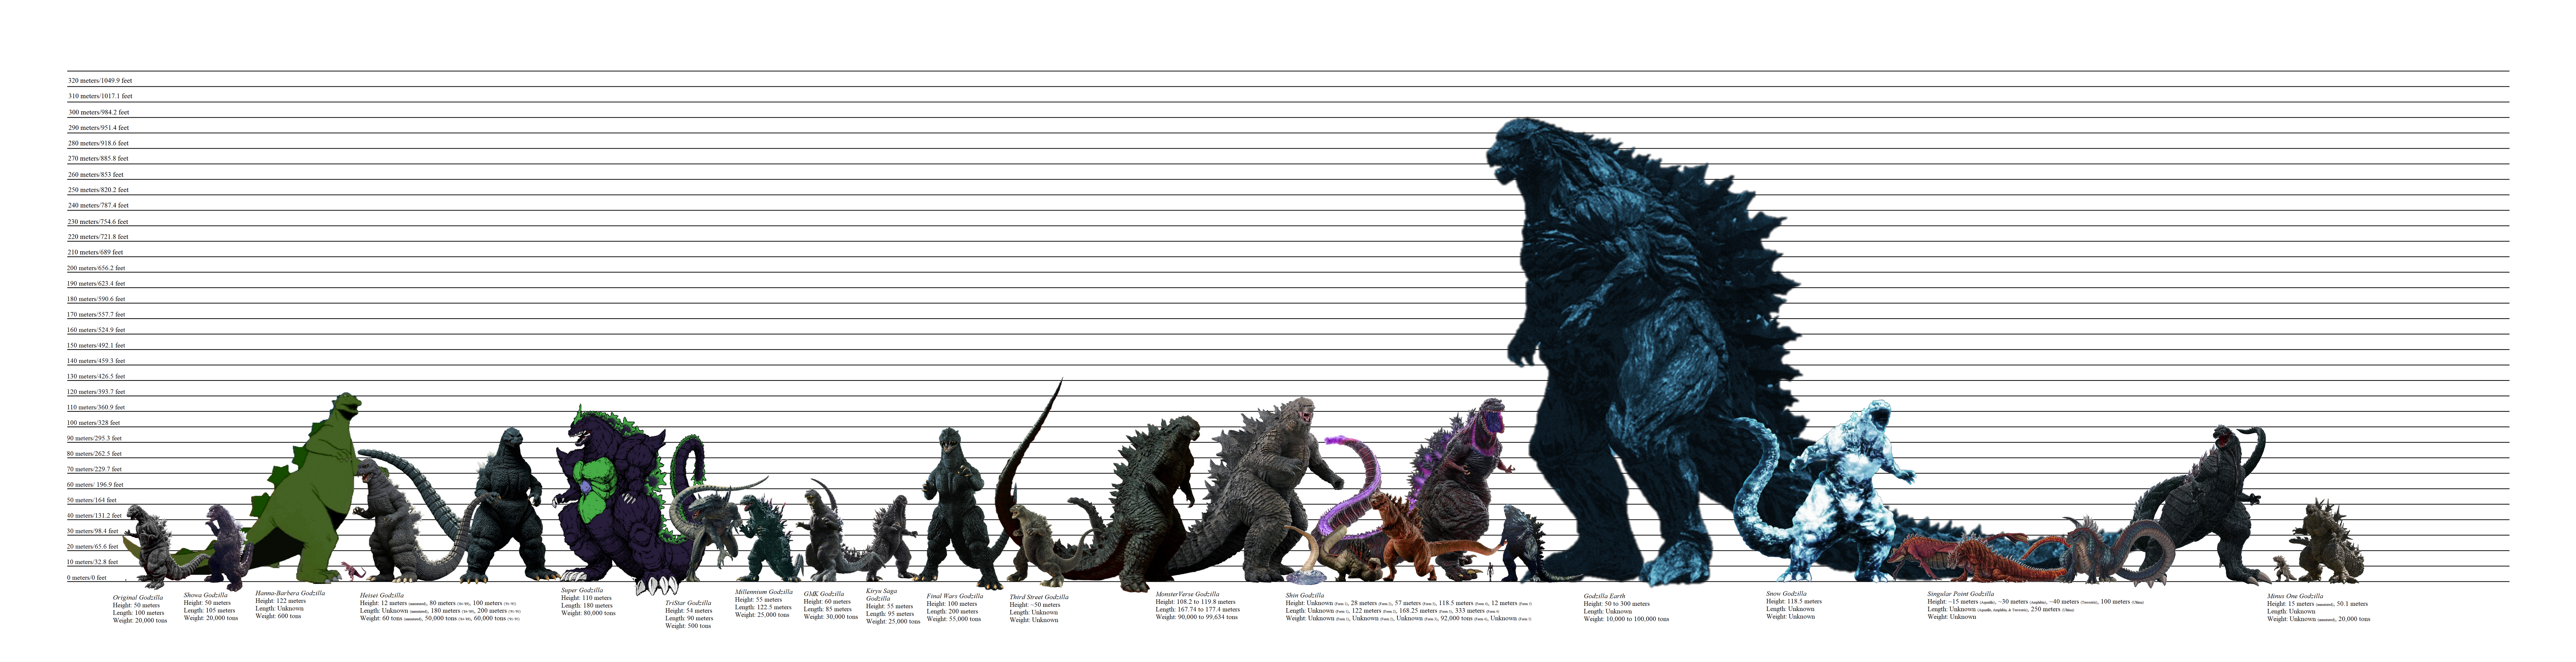 Ultimate Godzilla Size Comparison REDUX by megadanzilla on DeviantArt